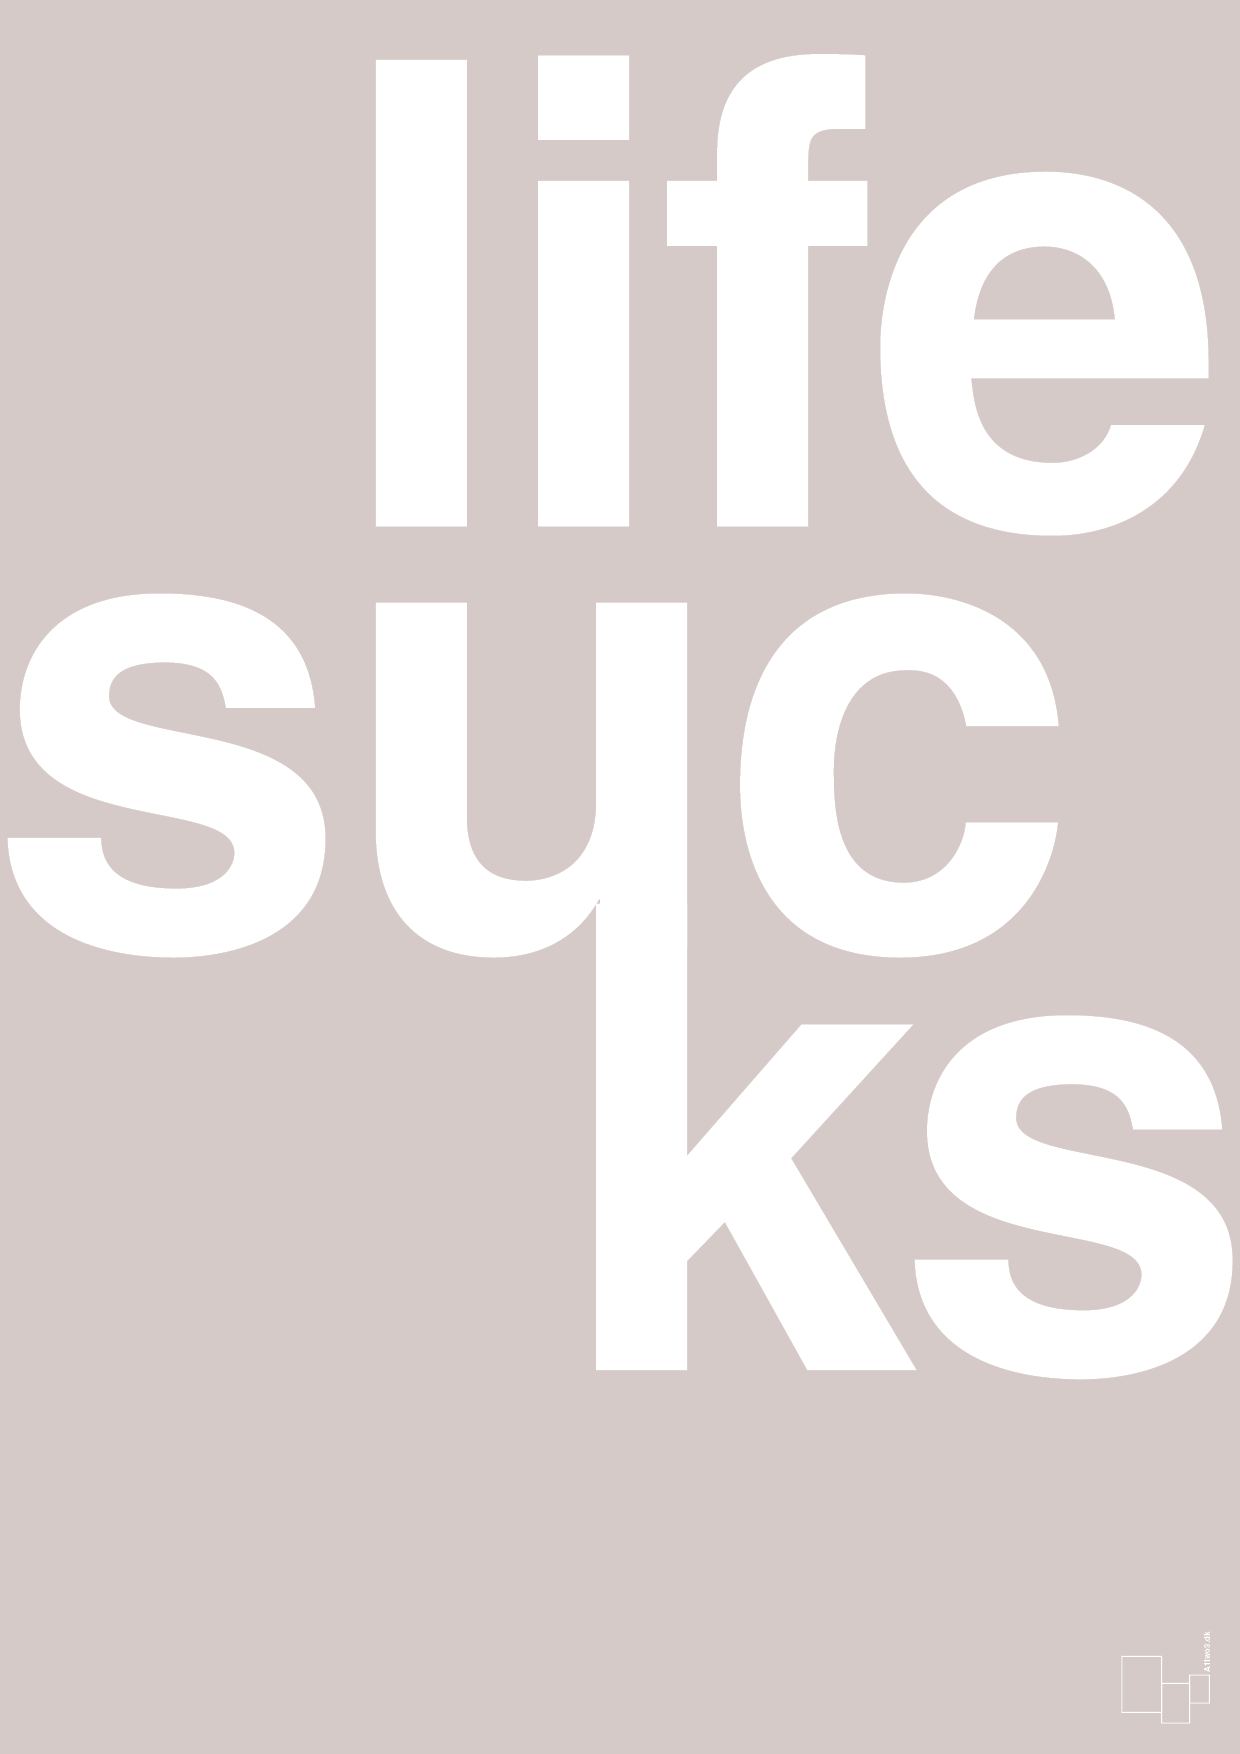 life sucks - Plakat med Ordsprog i Broken Beige